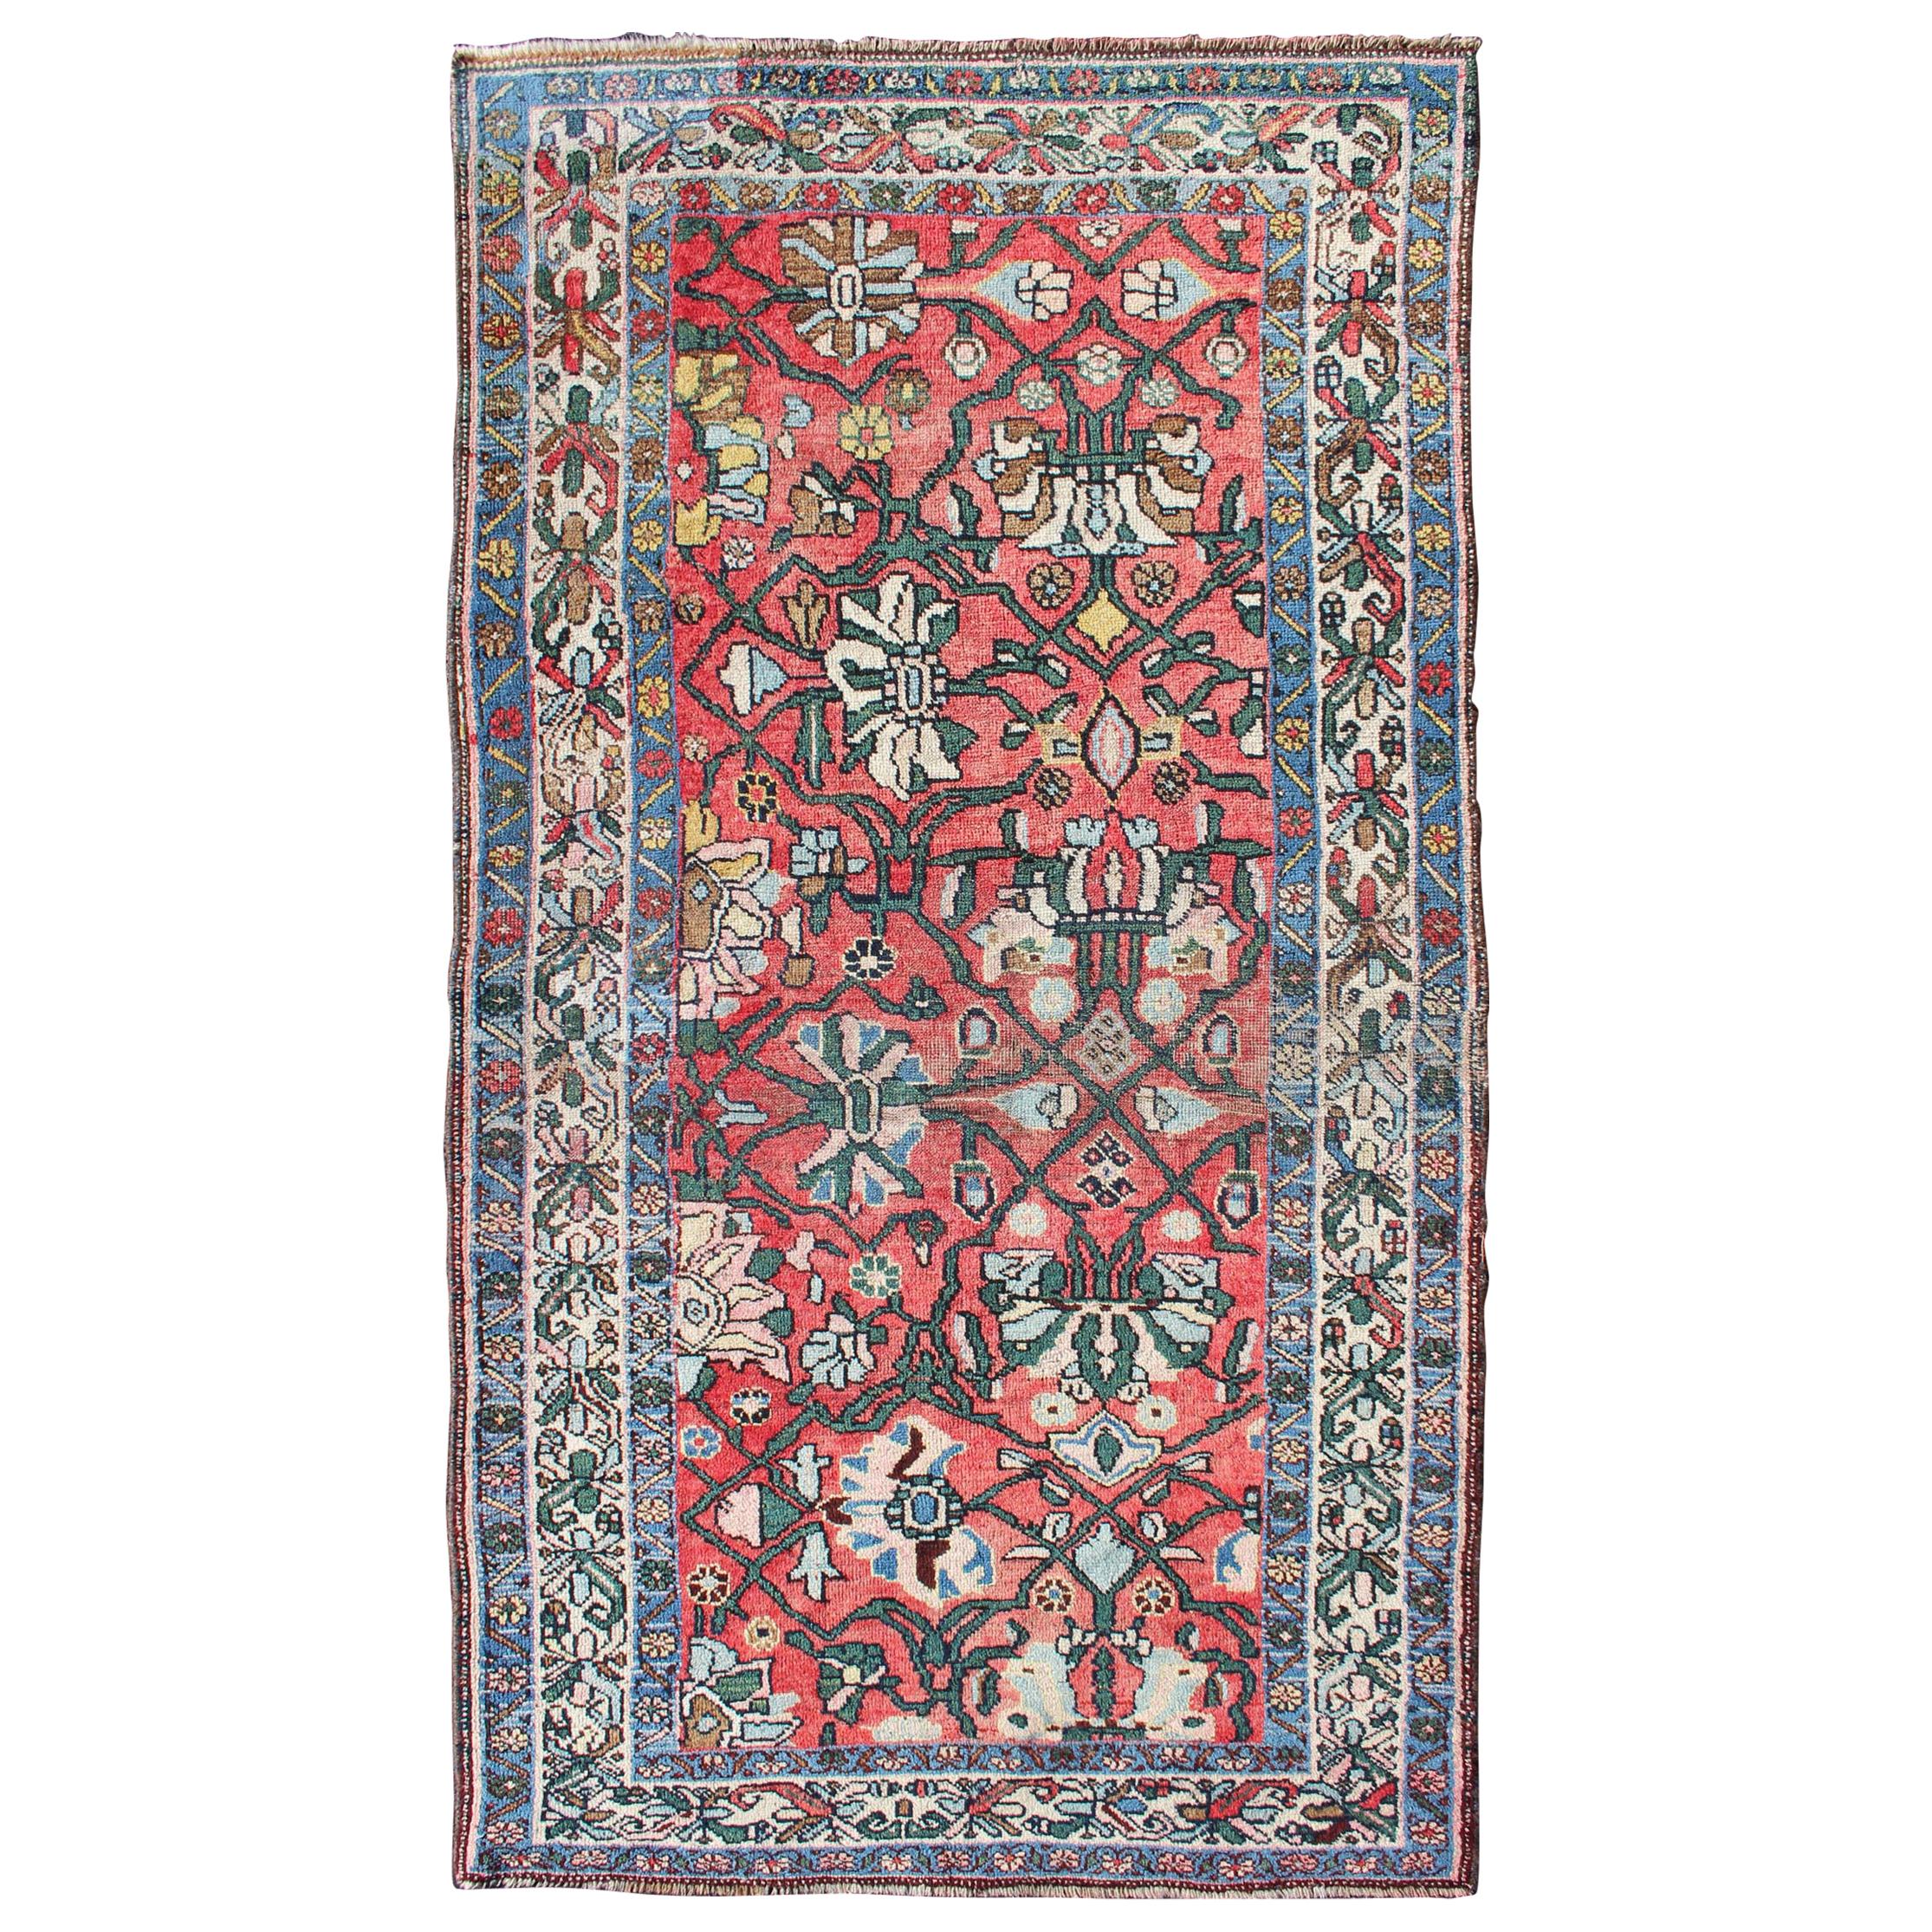 Tapis persan ancien Bidjar avec de grands motifs floraux en rouge, vert et bleu doux